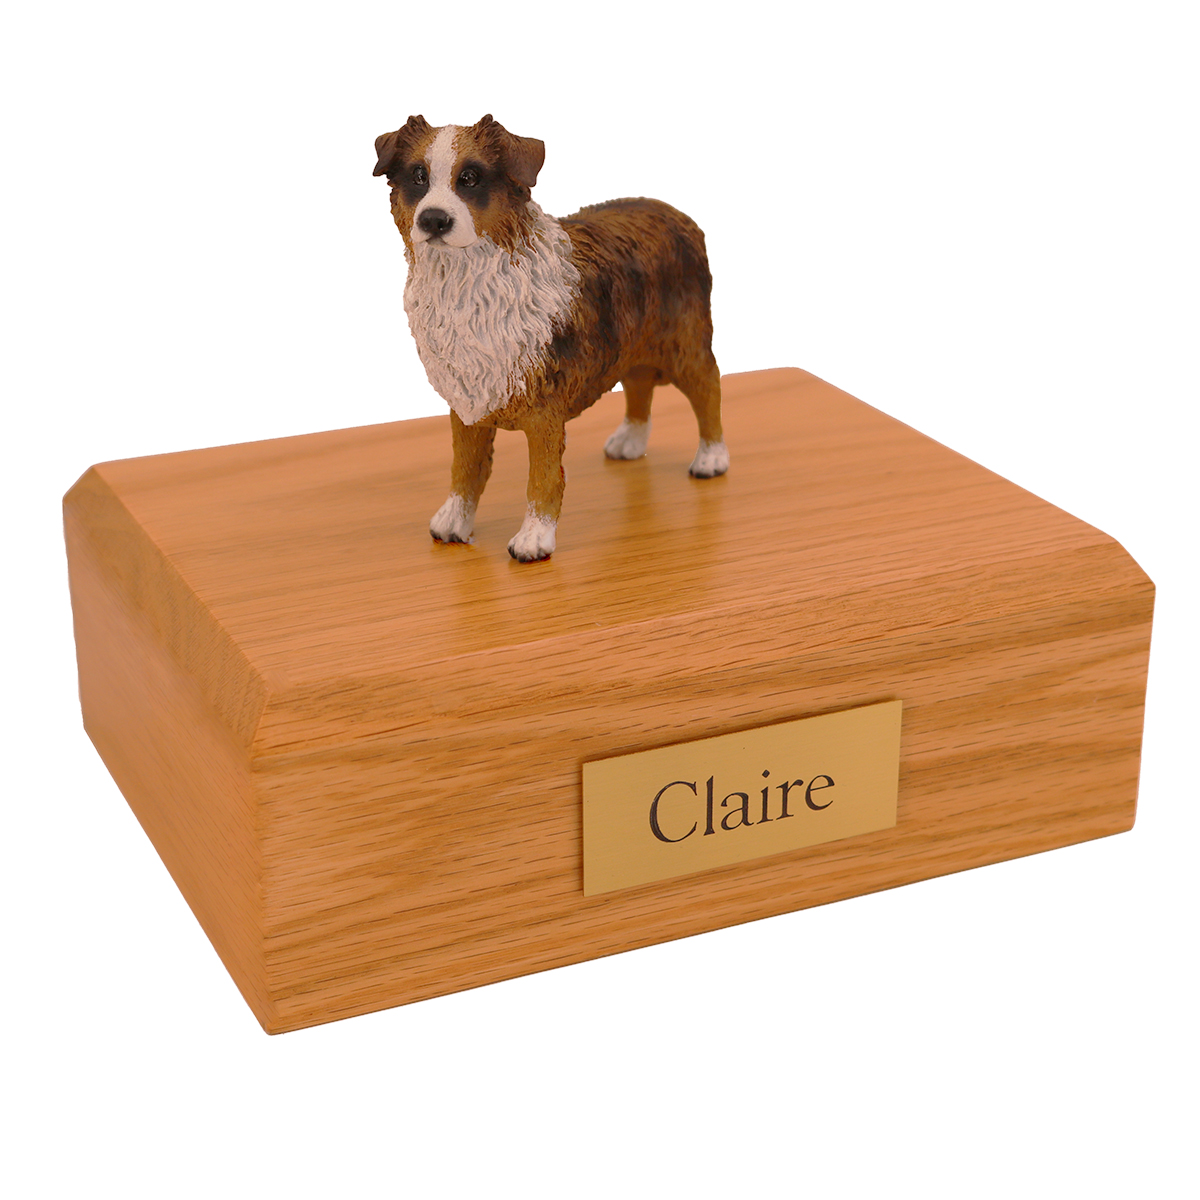 Dog, Australian Shepherd, Brn/W - Figurine Urn